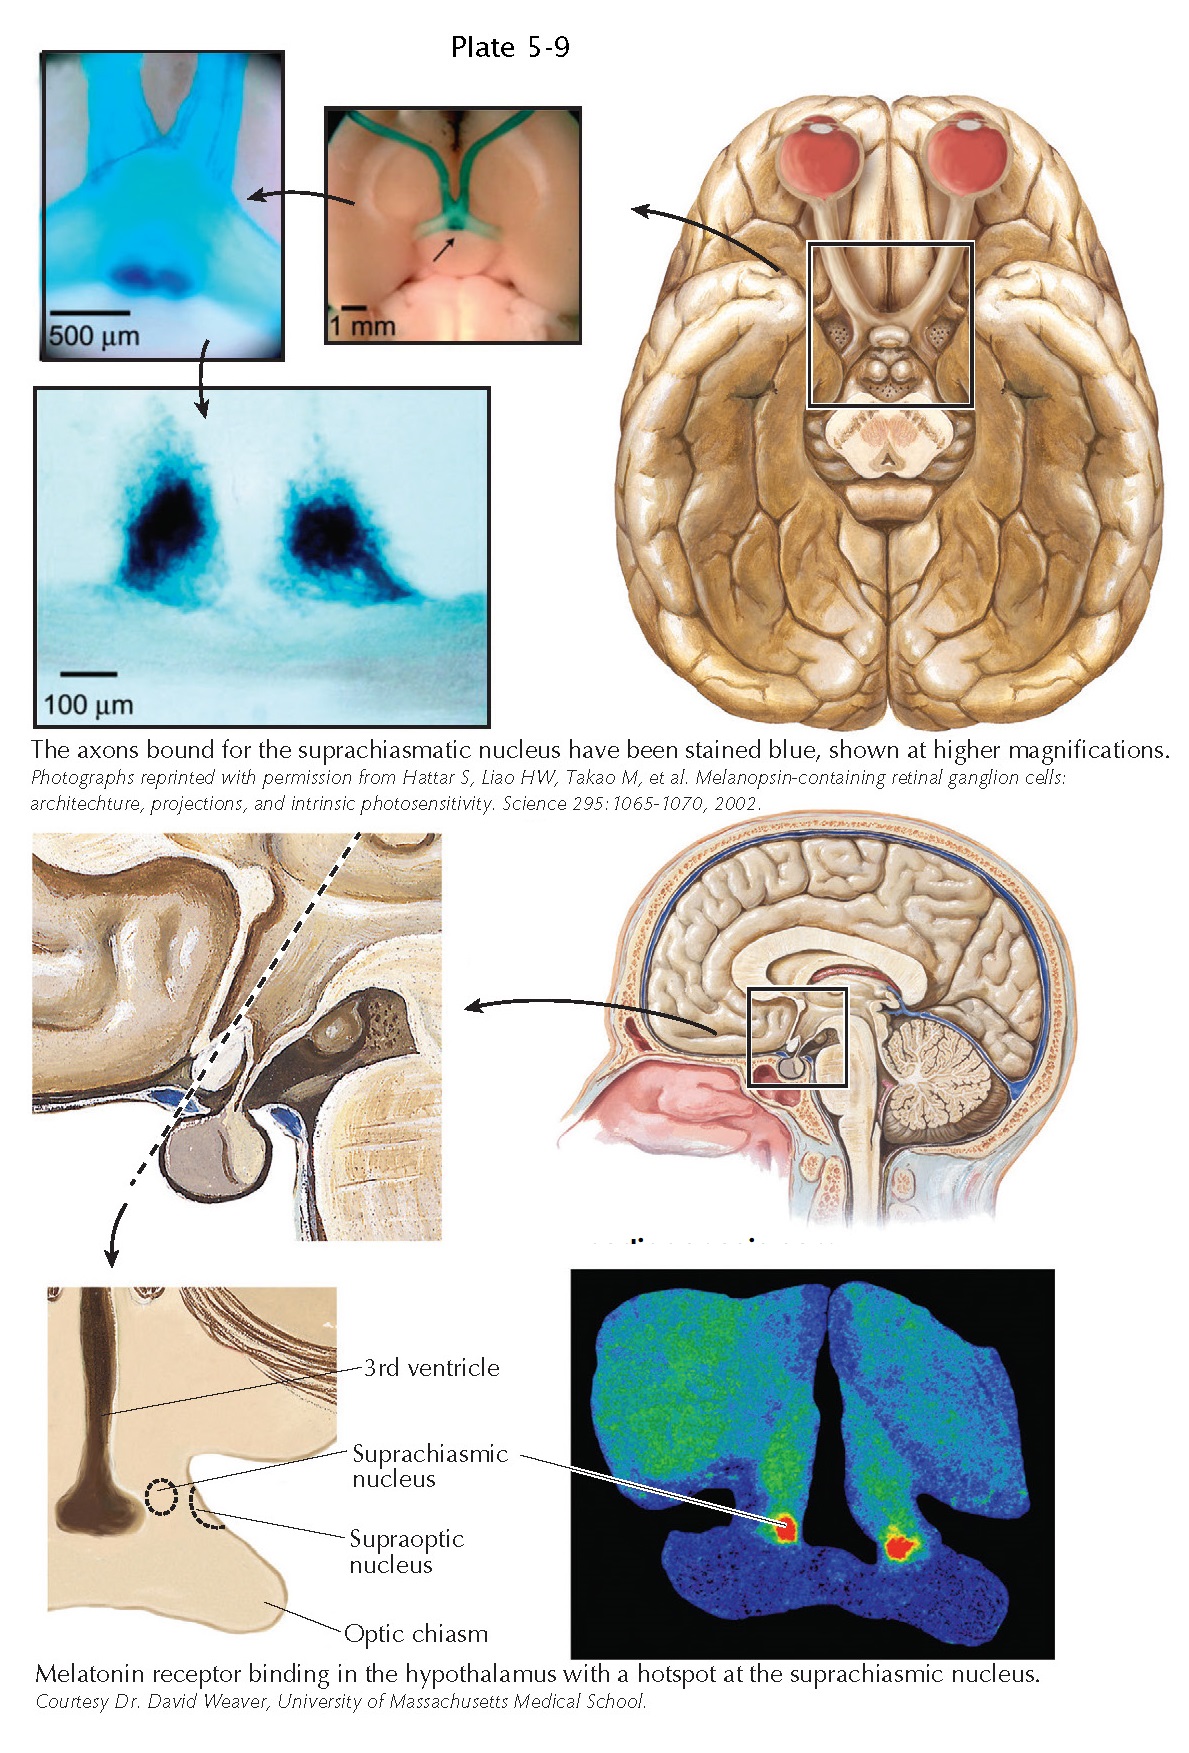 Visual Inputs to the Hypothalamus